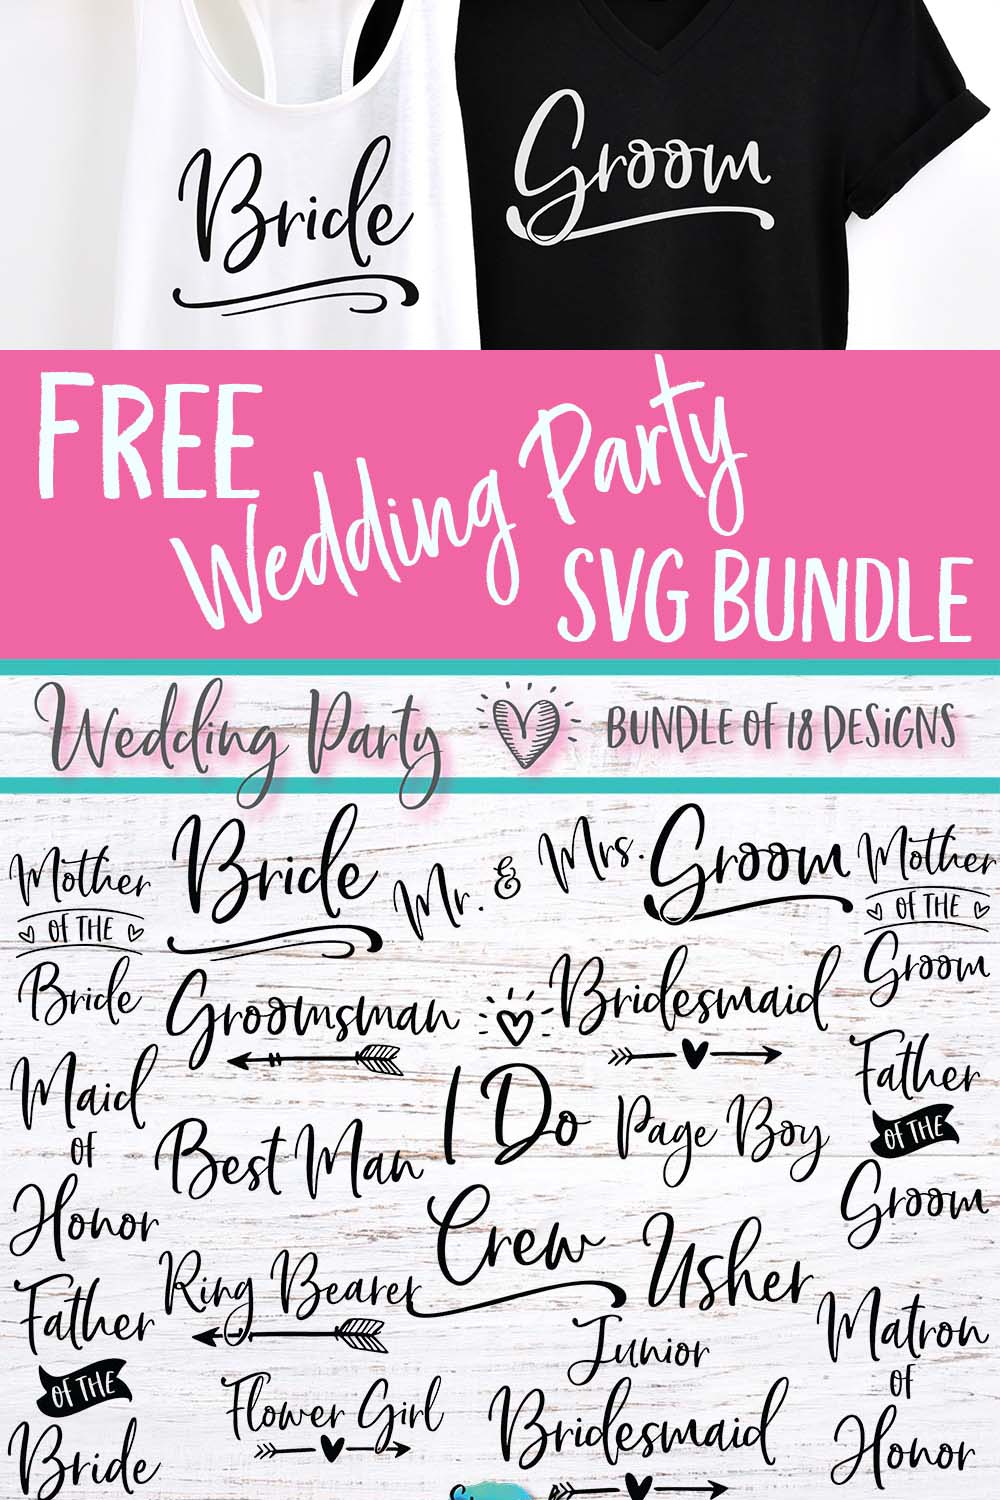 WEDDING PARTY FREE SVG BUNDLE